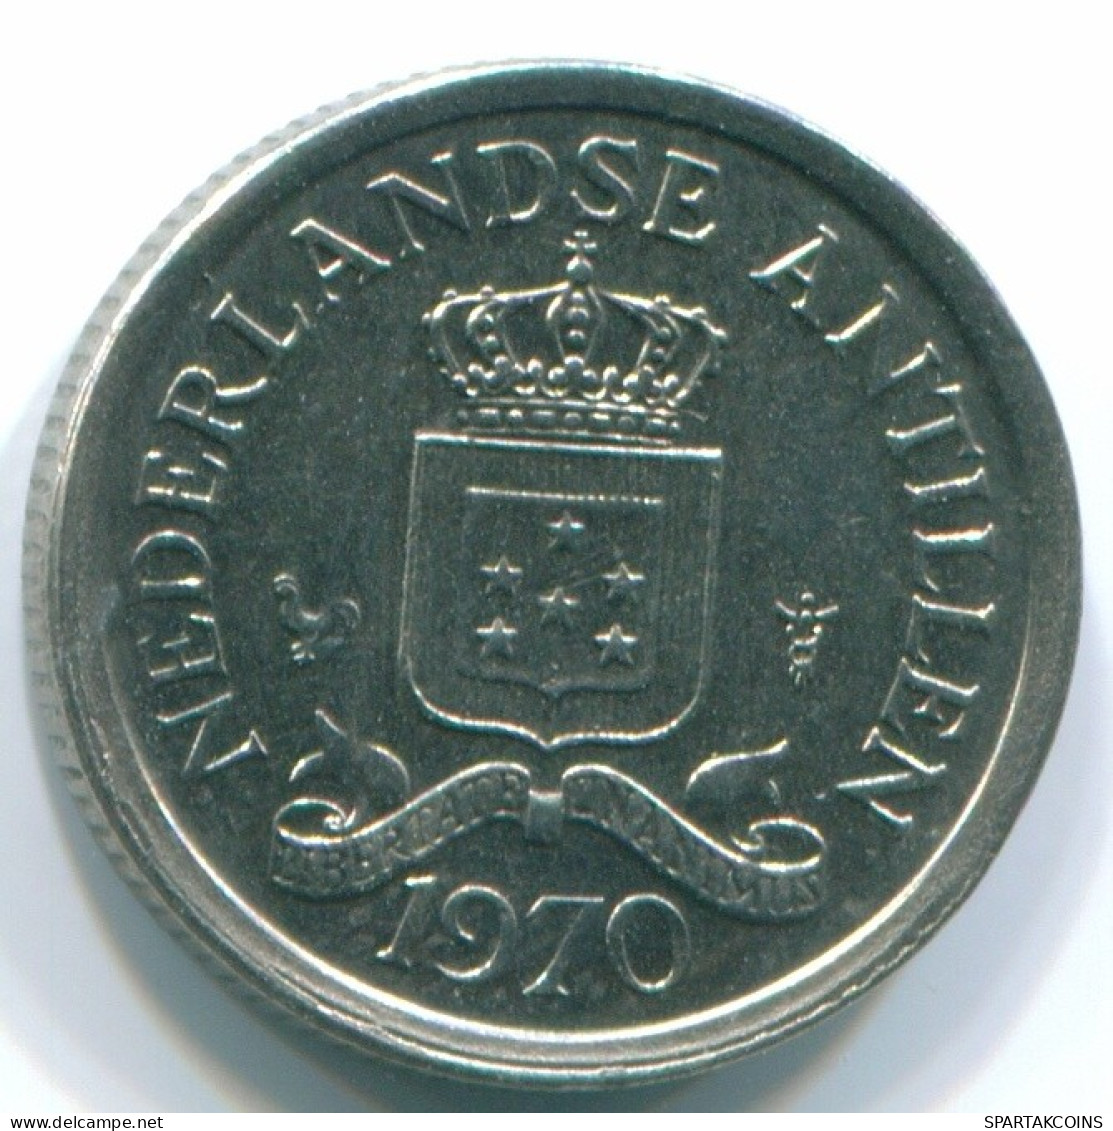 10 CENTS 1970 NIEDERLÄNDISCHE ANTILLEN Nickel Koloniale Münze #S13341.D.A - Netherlands Antilles